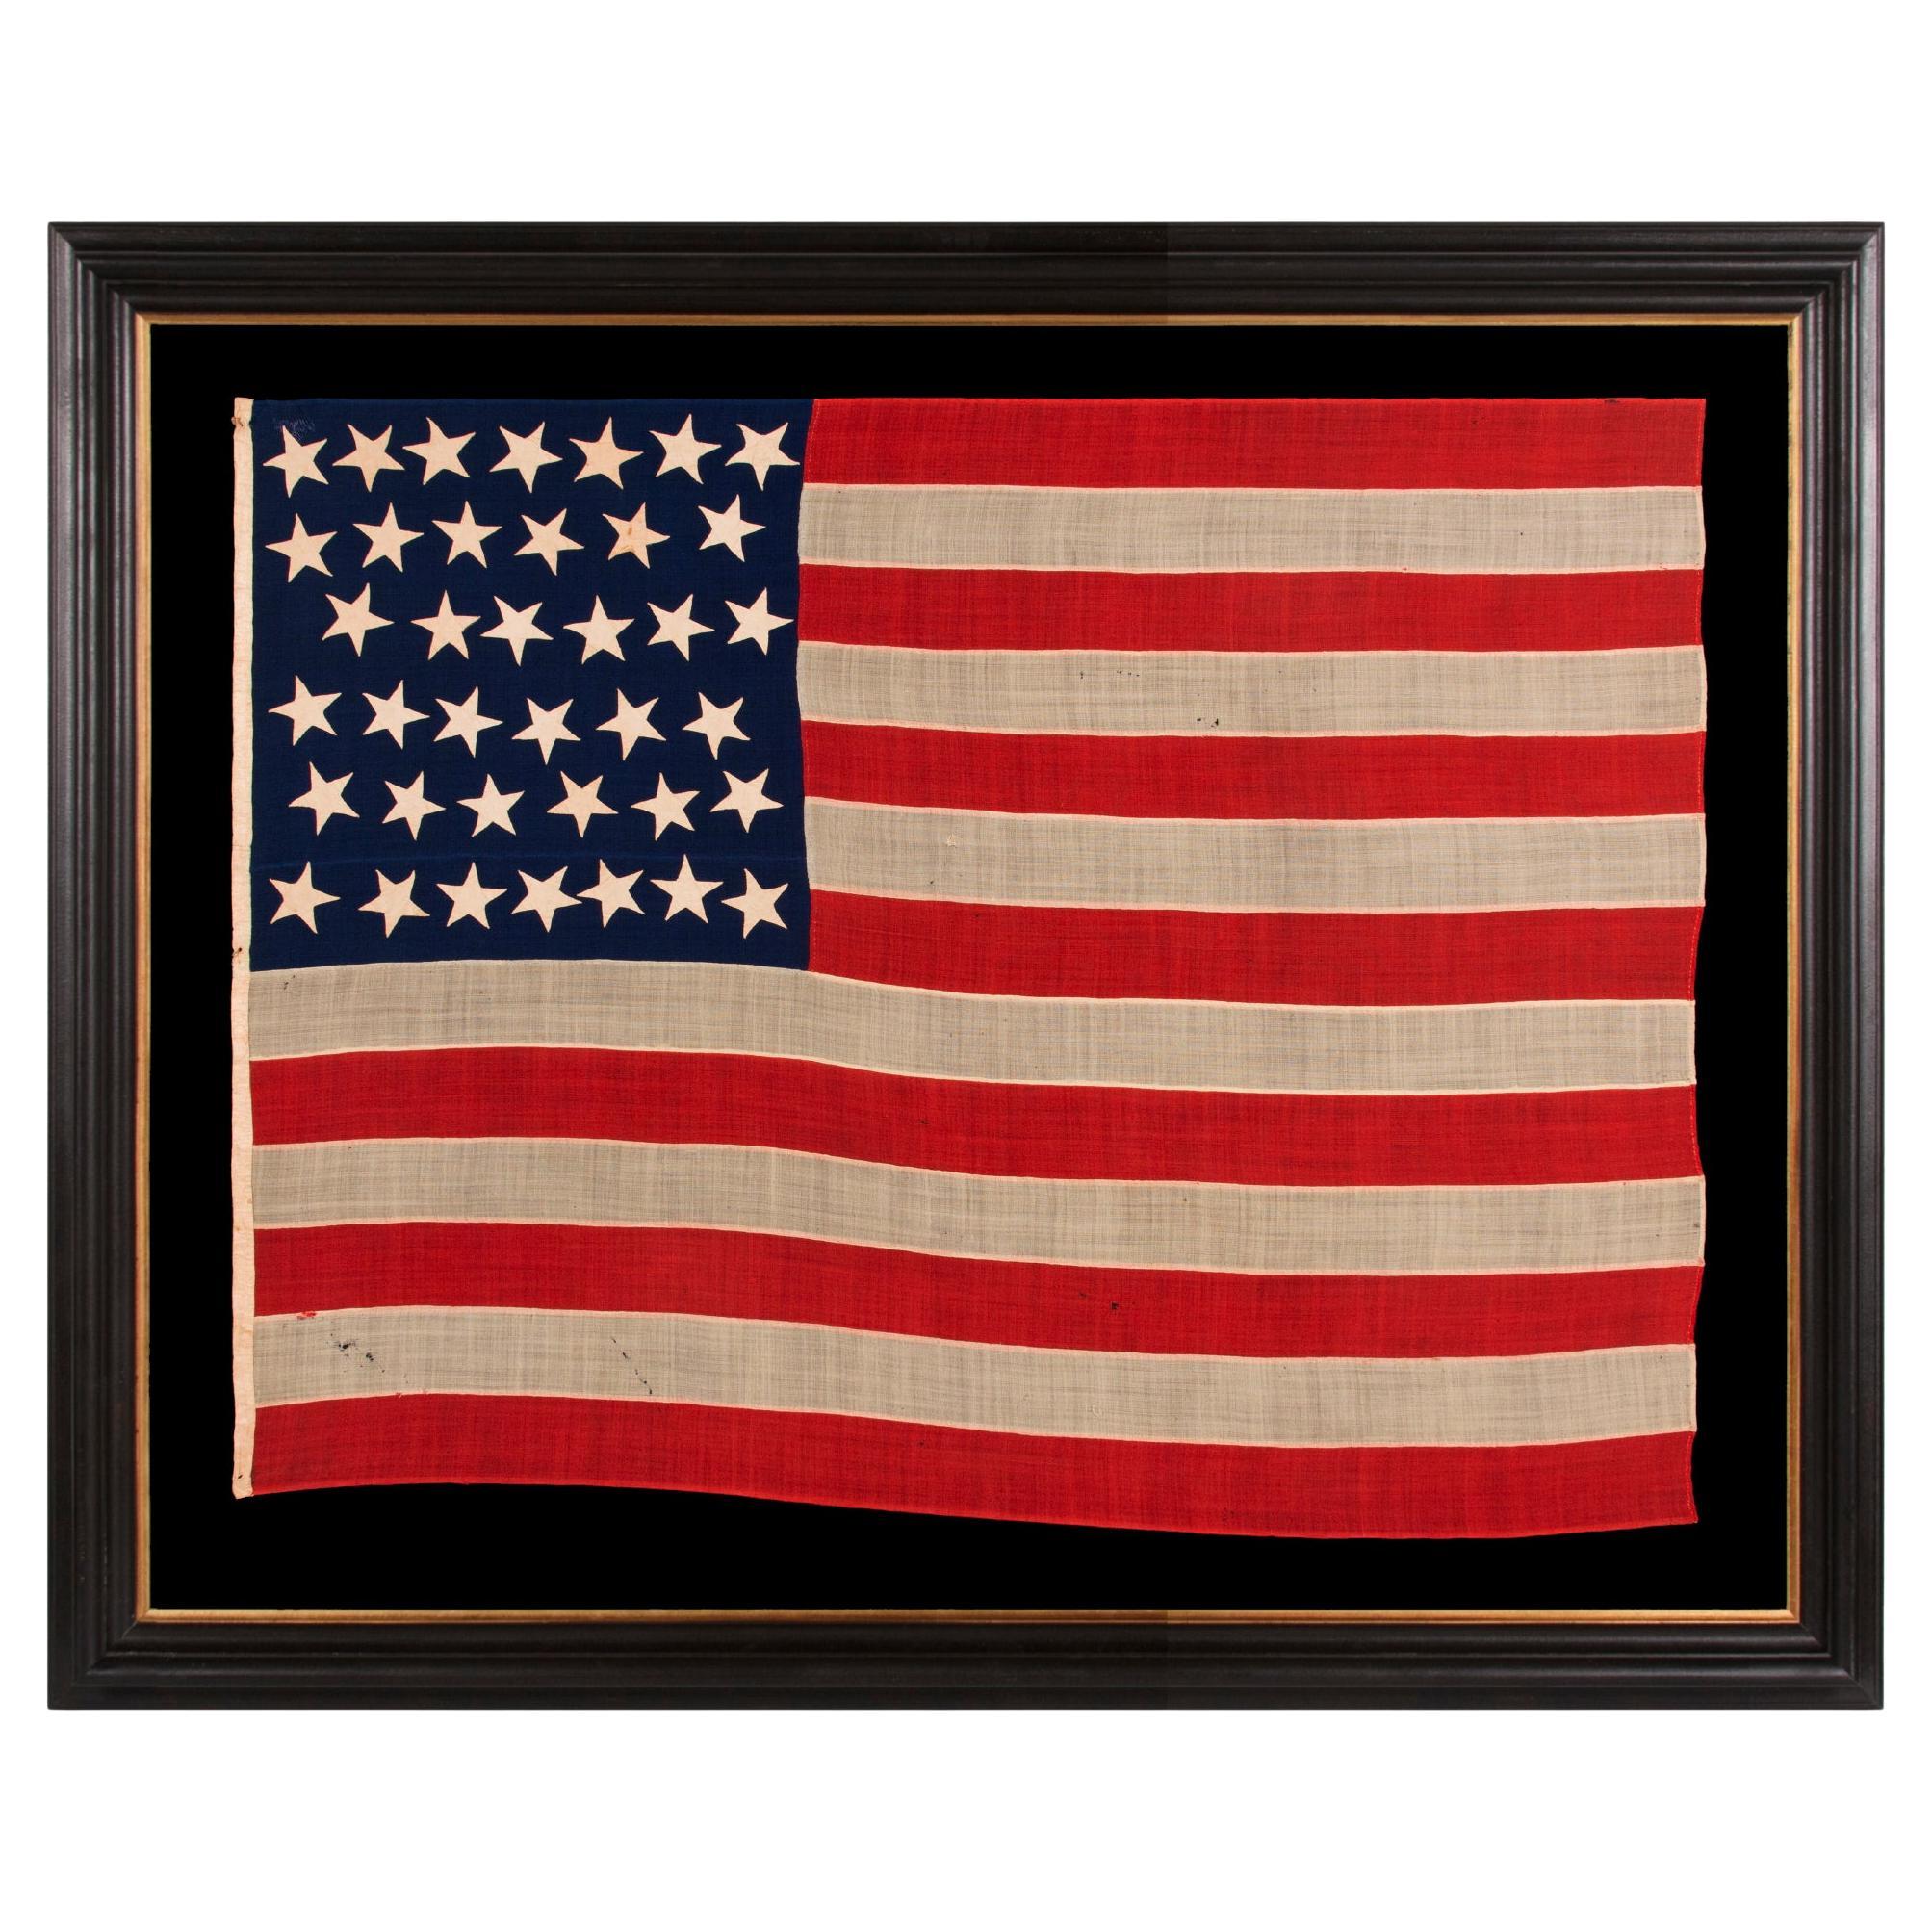 38 Star Antique American hand sewn Flag, Colorado Statehood, circa 1876-1889